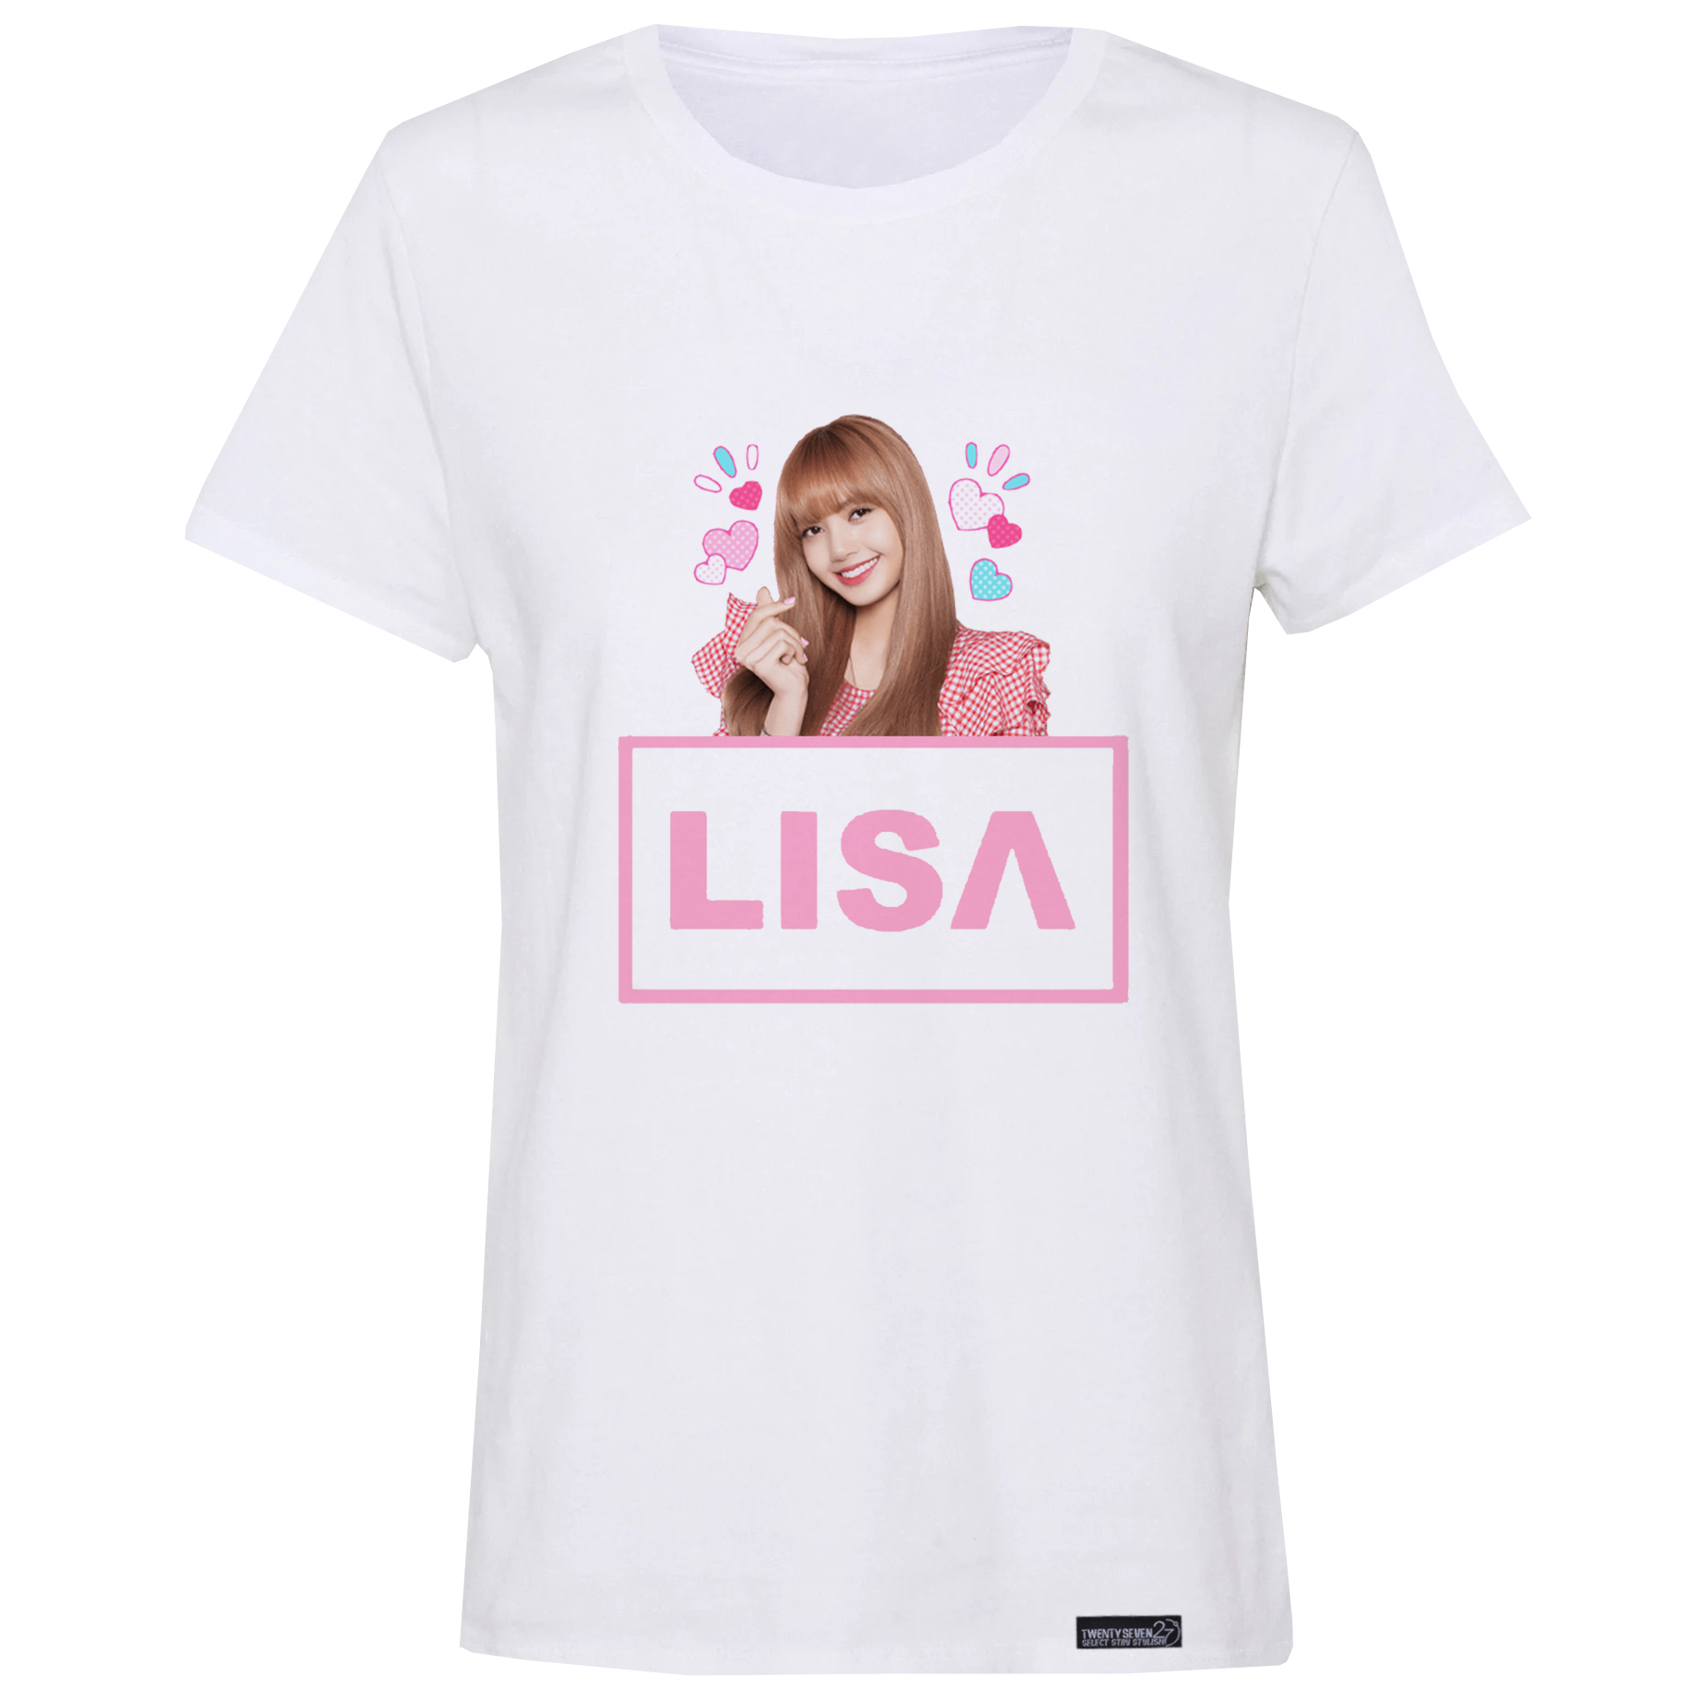 تی شرت آستین کوتاه زنانه 27 مدل لیسا بلک پینک کد WN583 -  - 1